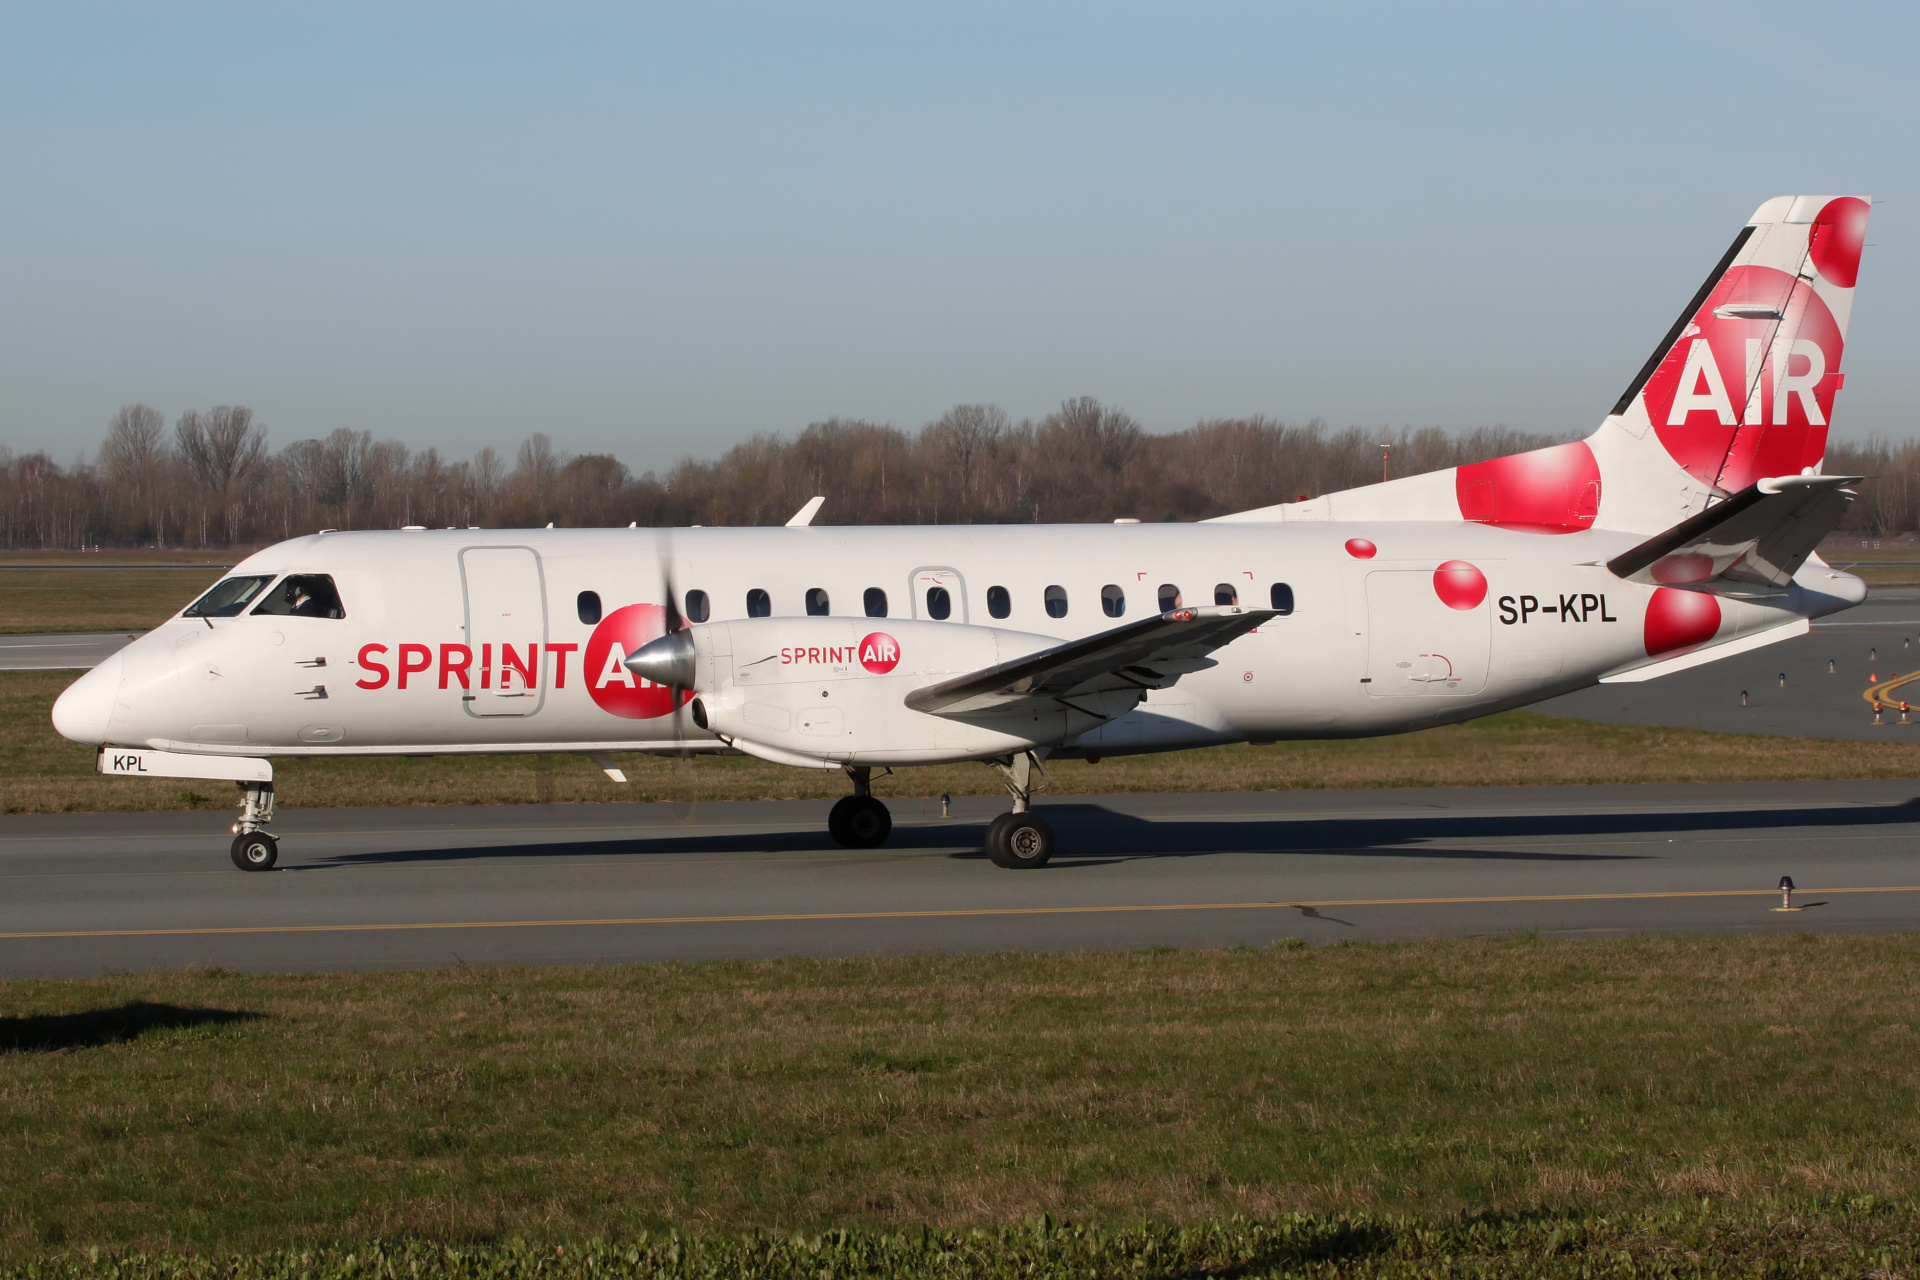 SP-KPL (Aircraft » EPWA Spotting » Saab 340 » 340A » SprintAir)